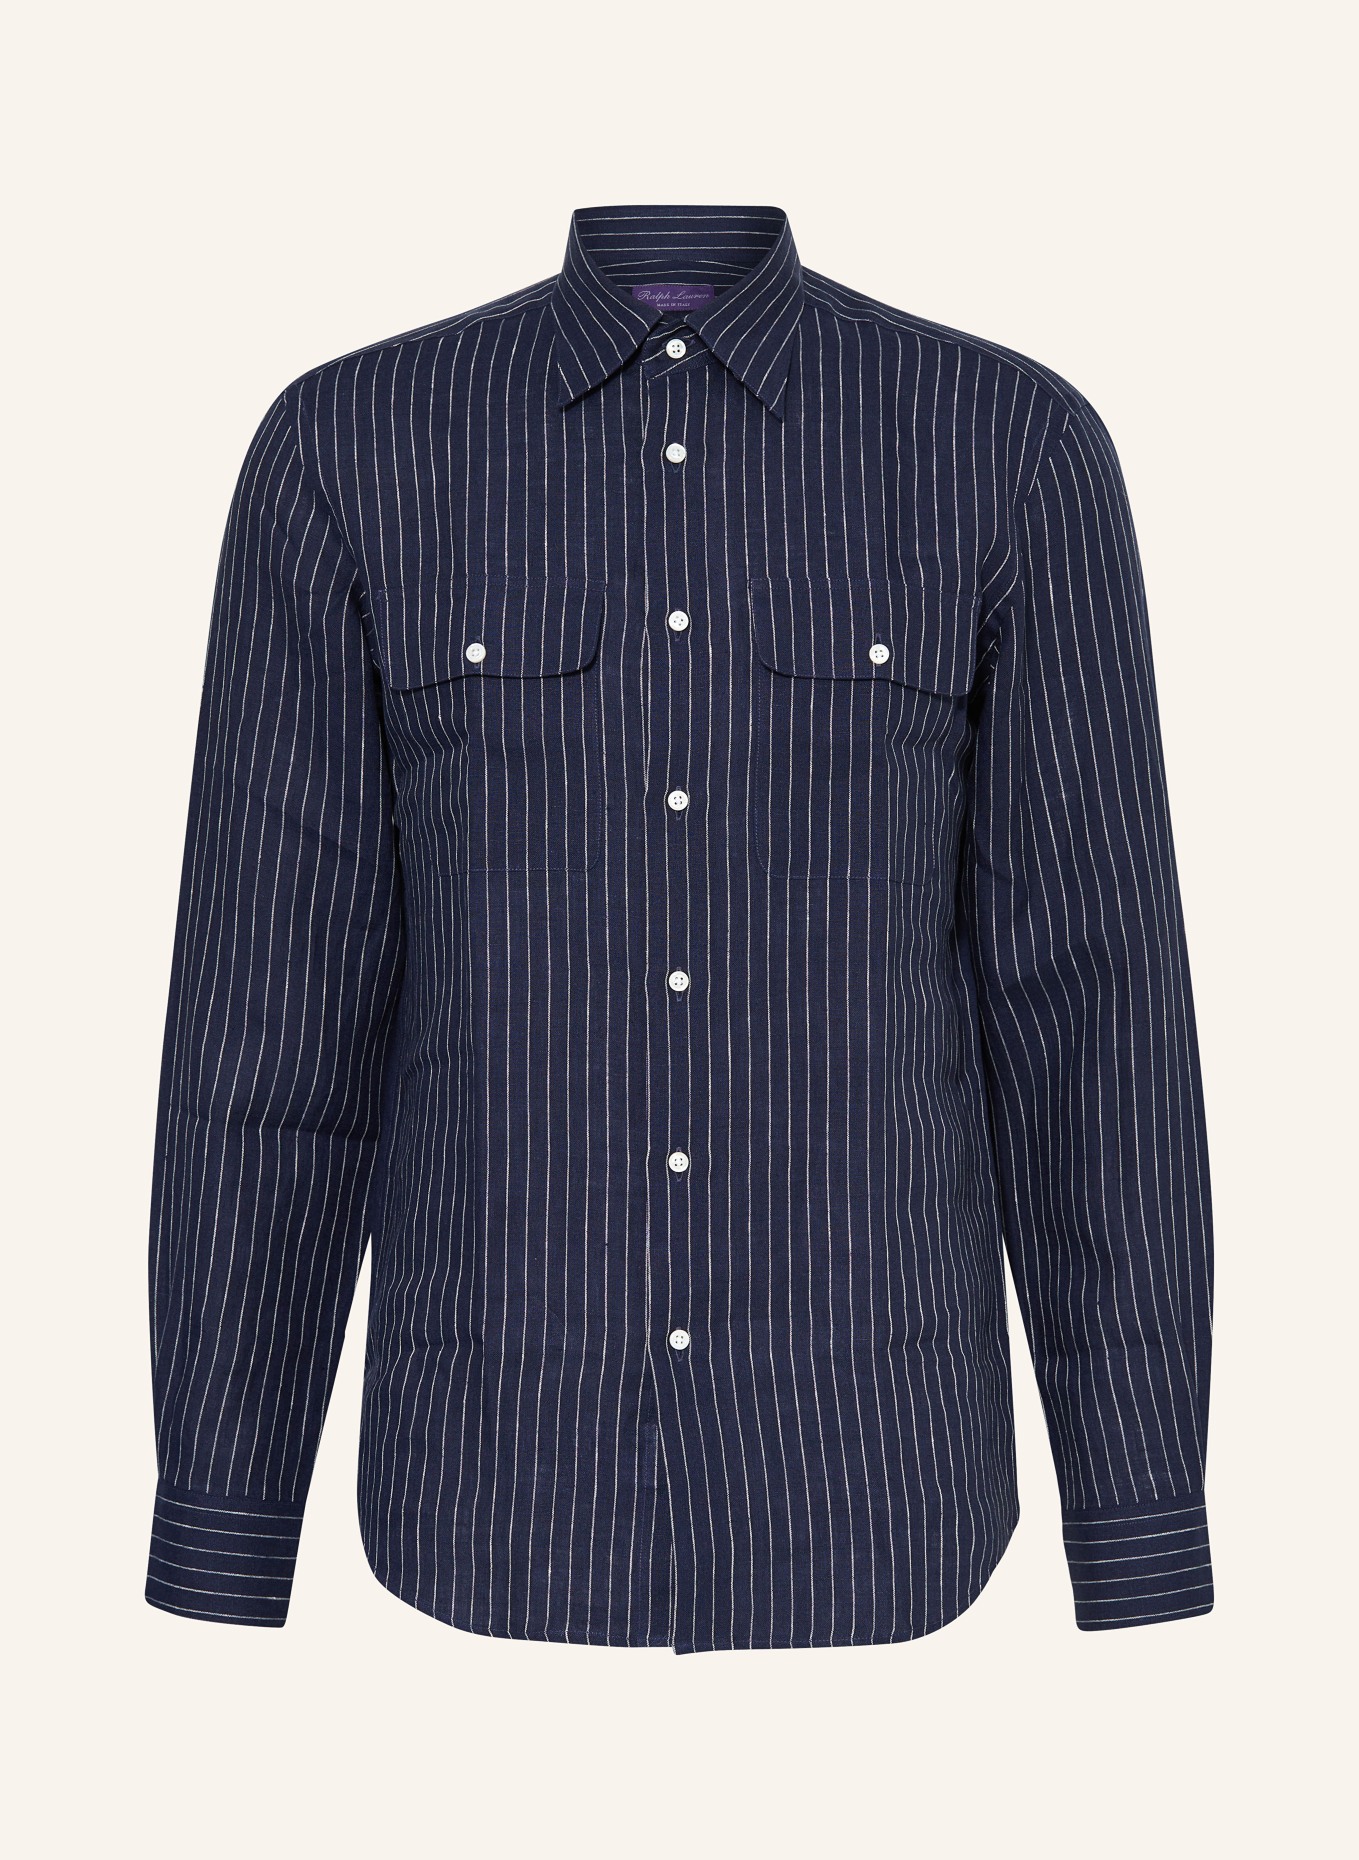 RALPH LAUREN PURPLE LABEL Leinenhemd Regular Fit, Farbe: DUNKELBLAU/ WEISS (Bild 1)